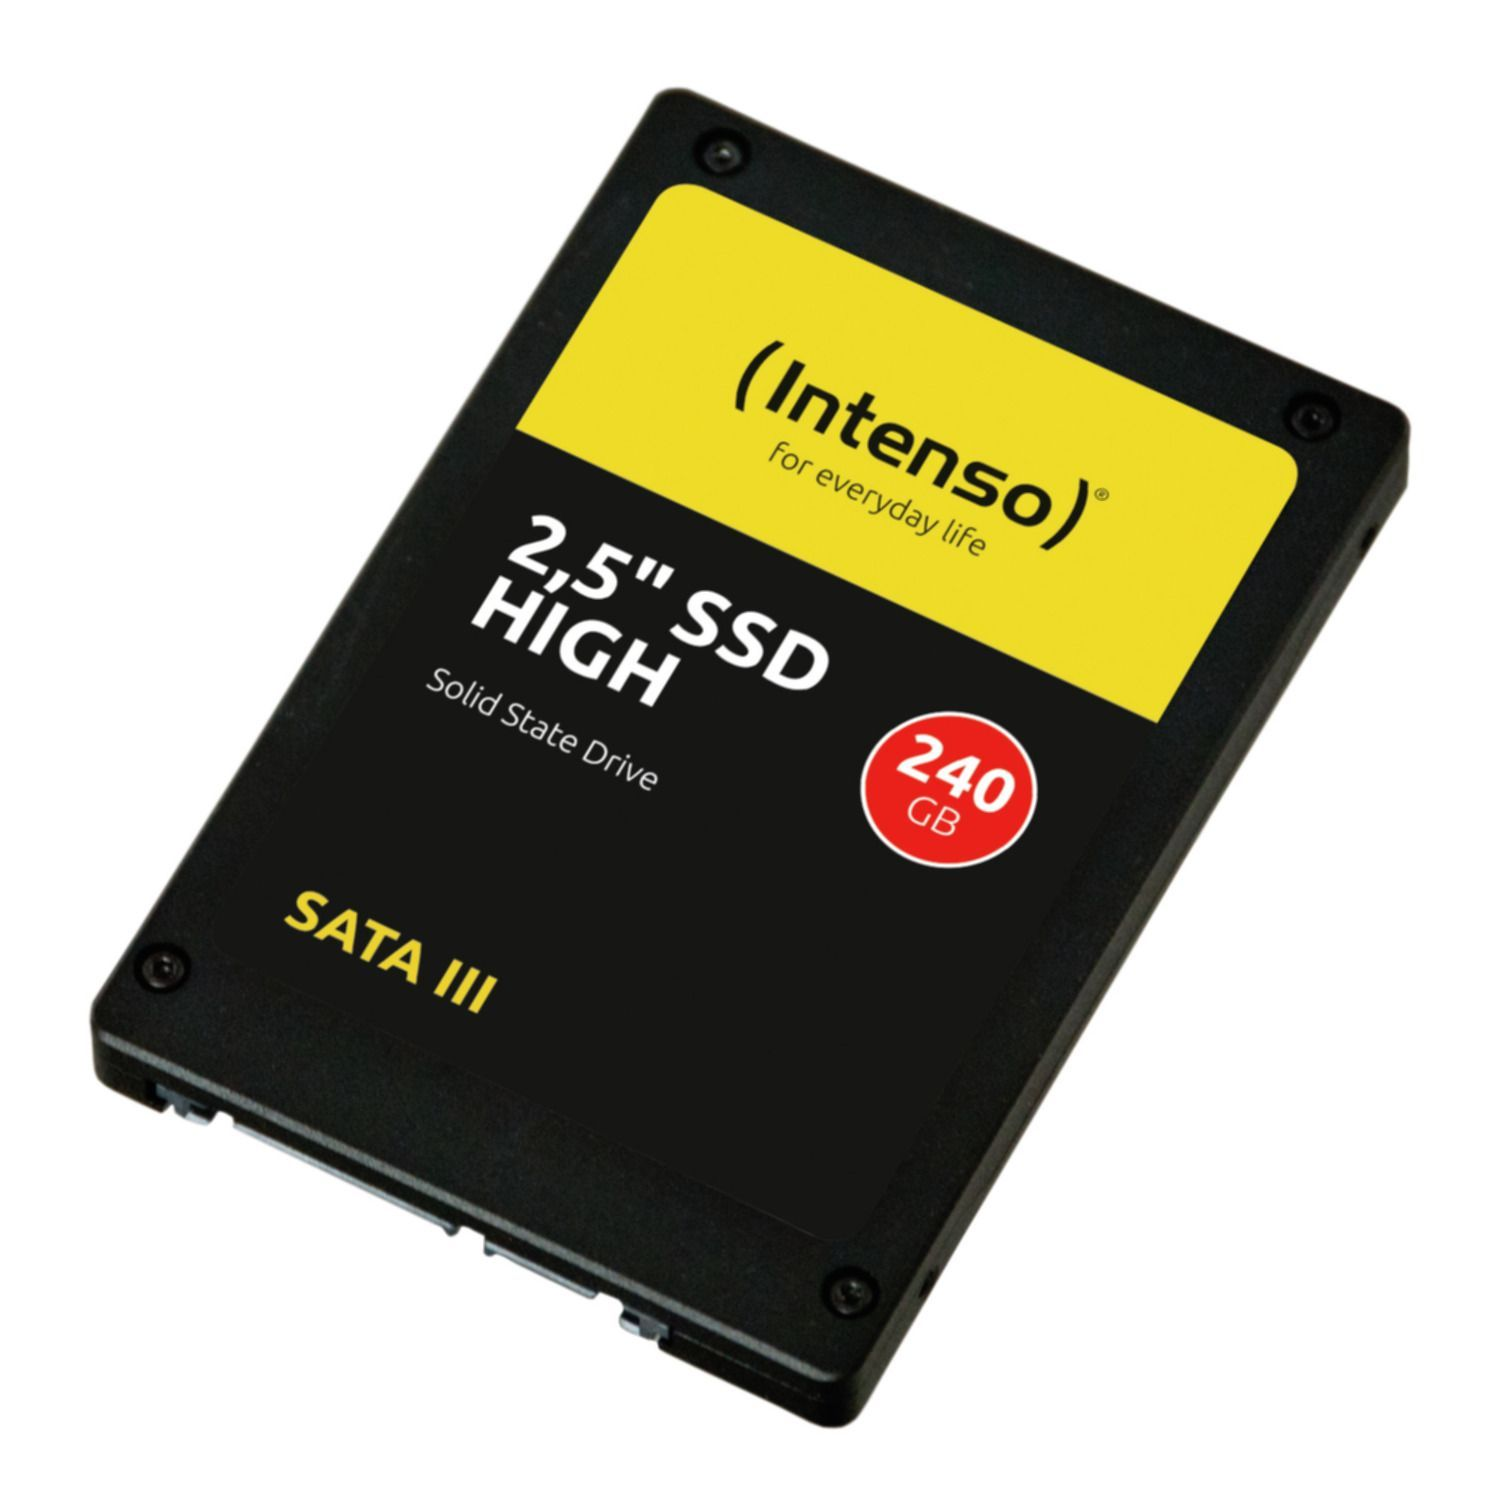 SSD, 2,5 INTENSO intern High, Zoll, 240 GB,